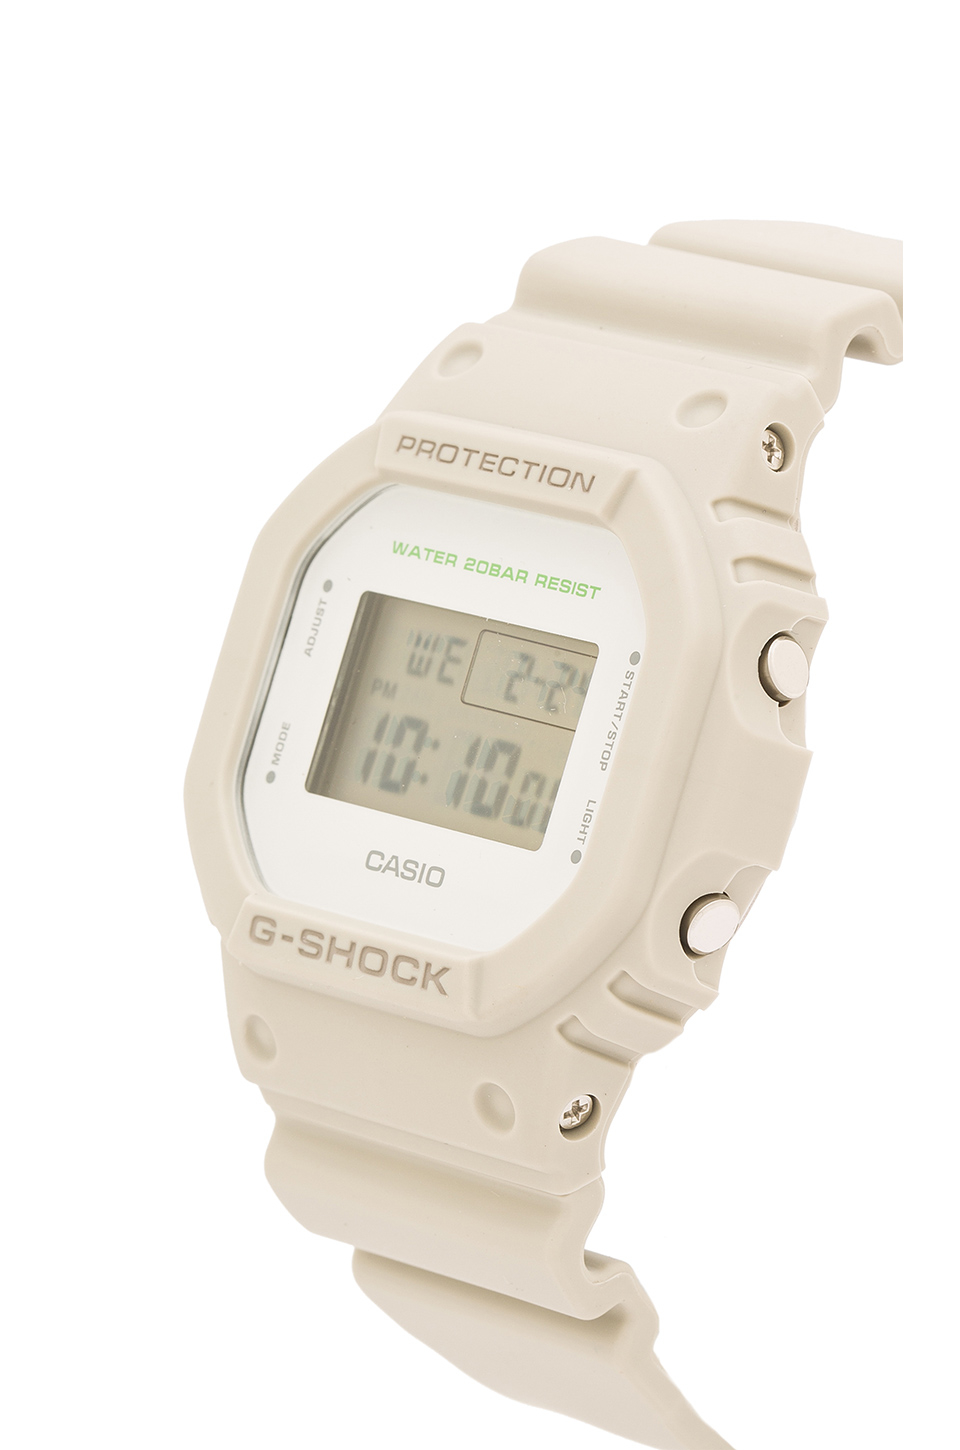 NEW DW-5600 Casio G-Shock x MiharaYasuhiro Khaki Green Limited Watch